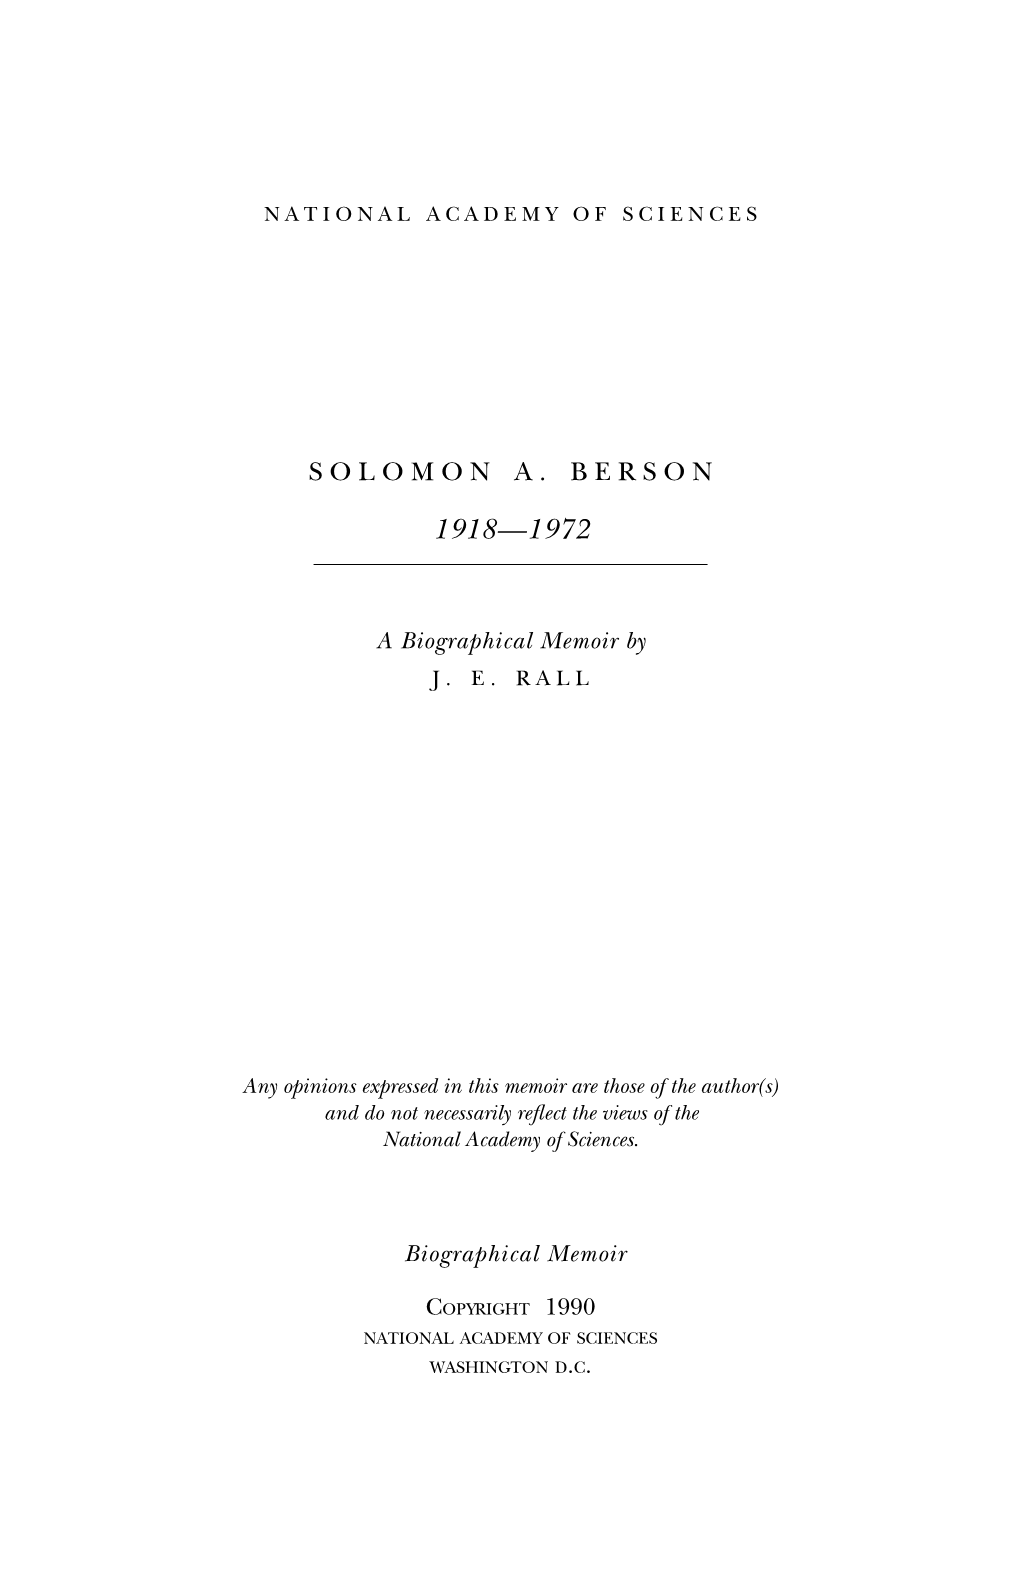 SOLOMON A. BERSON April 22,1918-April 11,1972